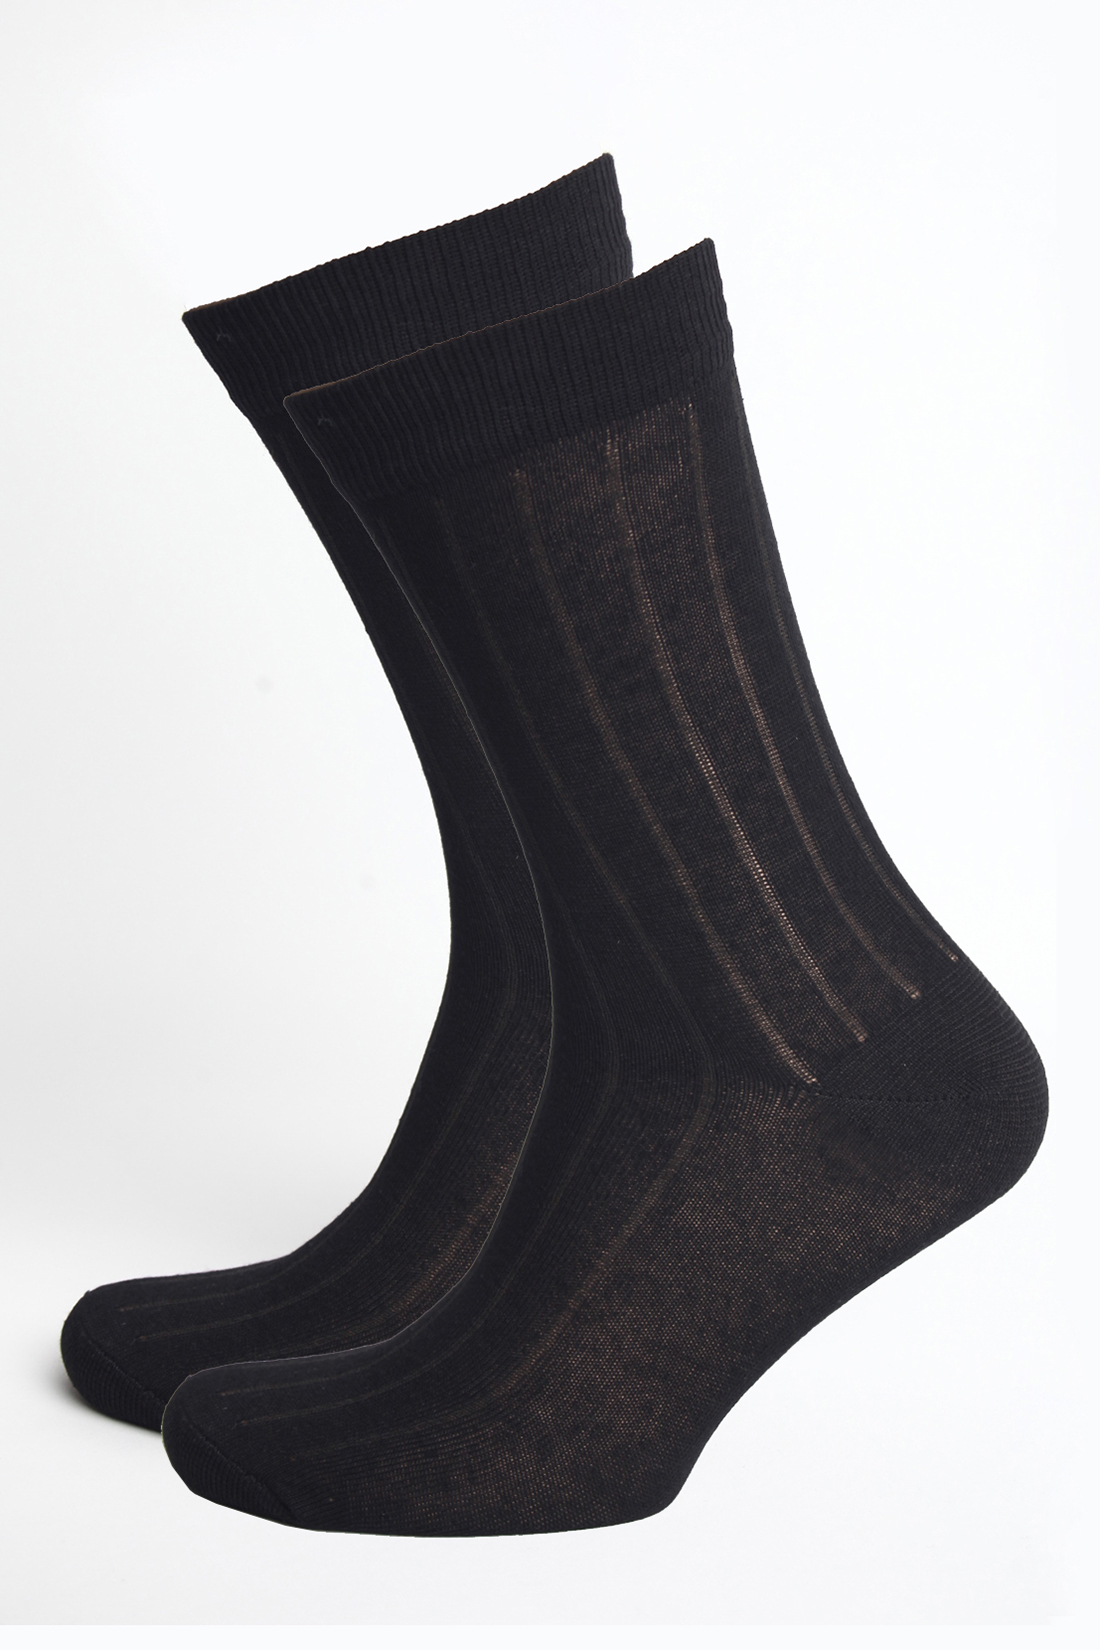 Мужские носки, 2 пары (арт. baon B891110), размер 40/42, цвет черный